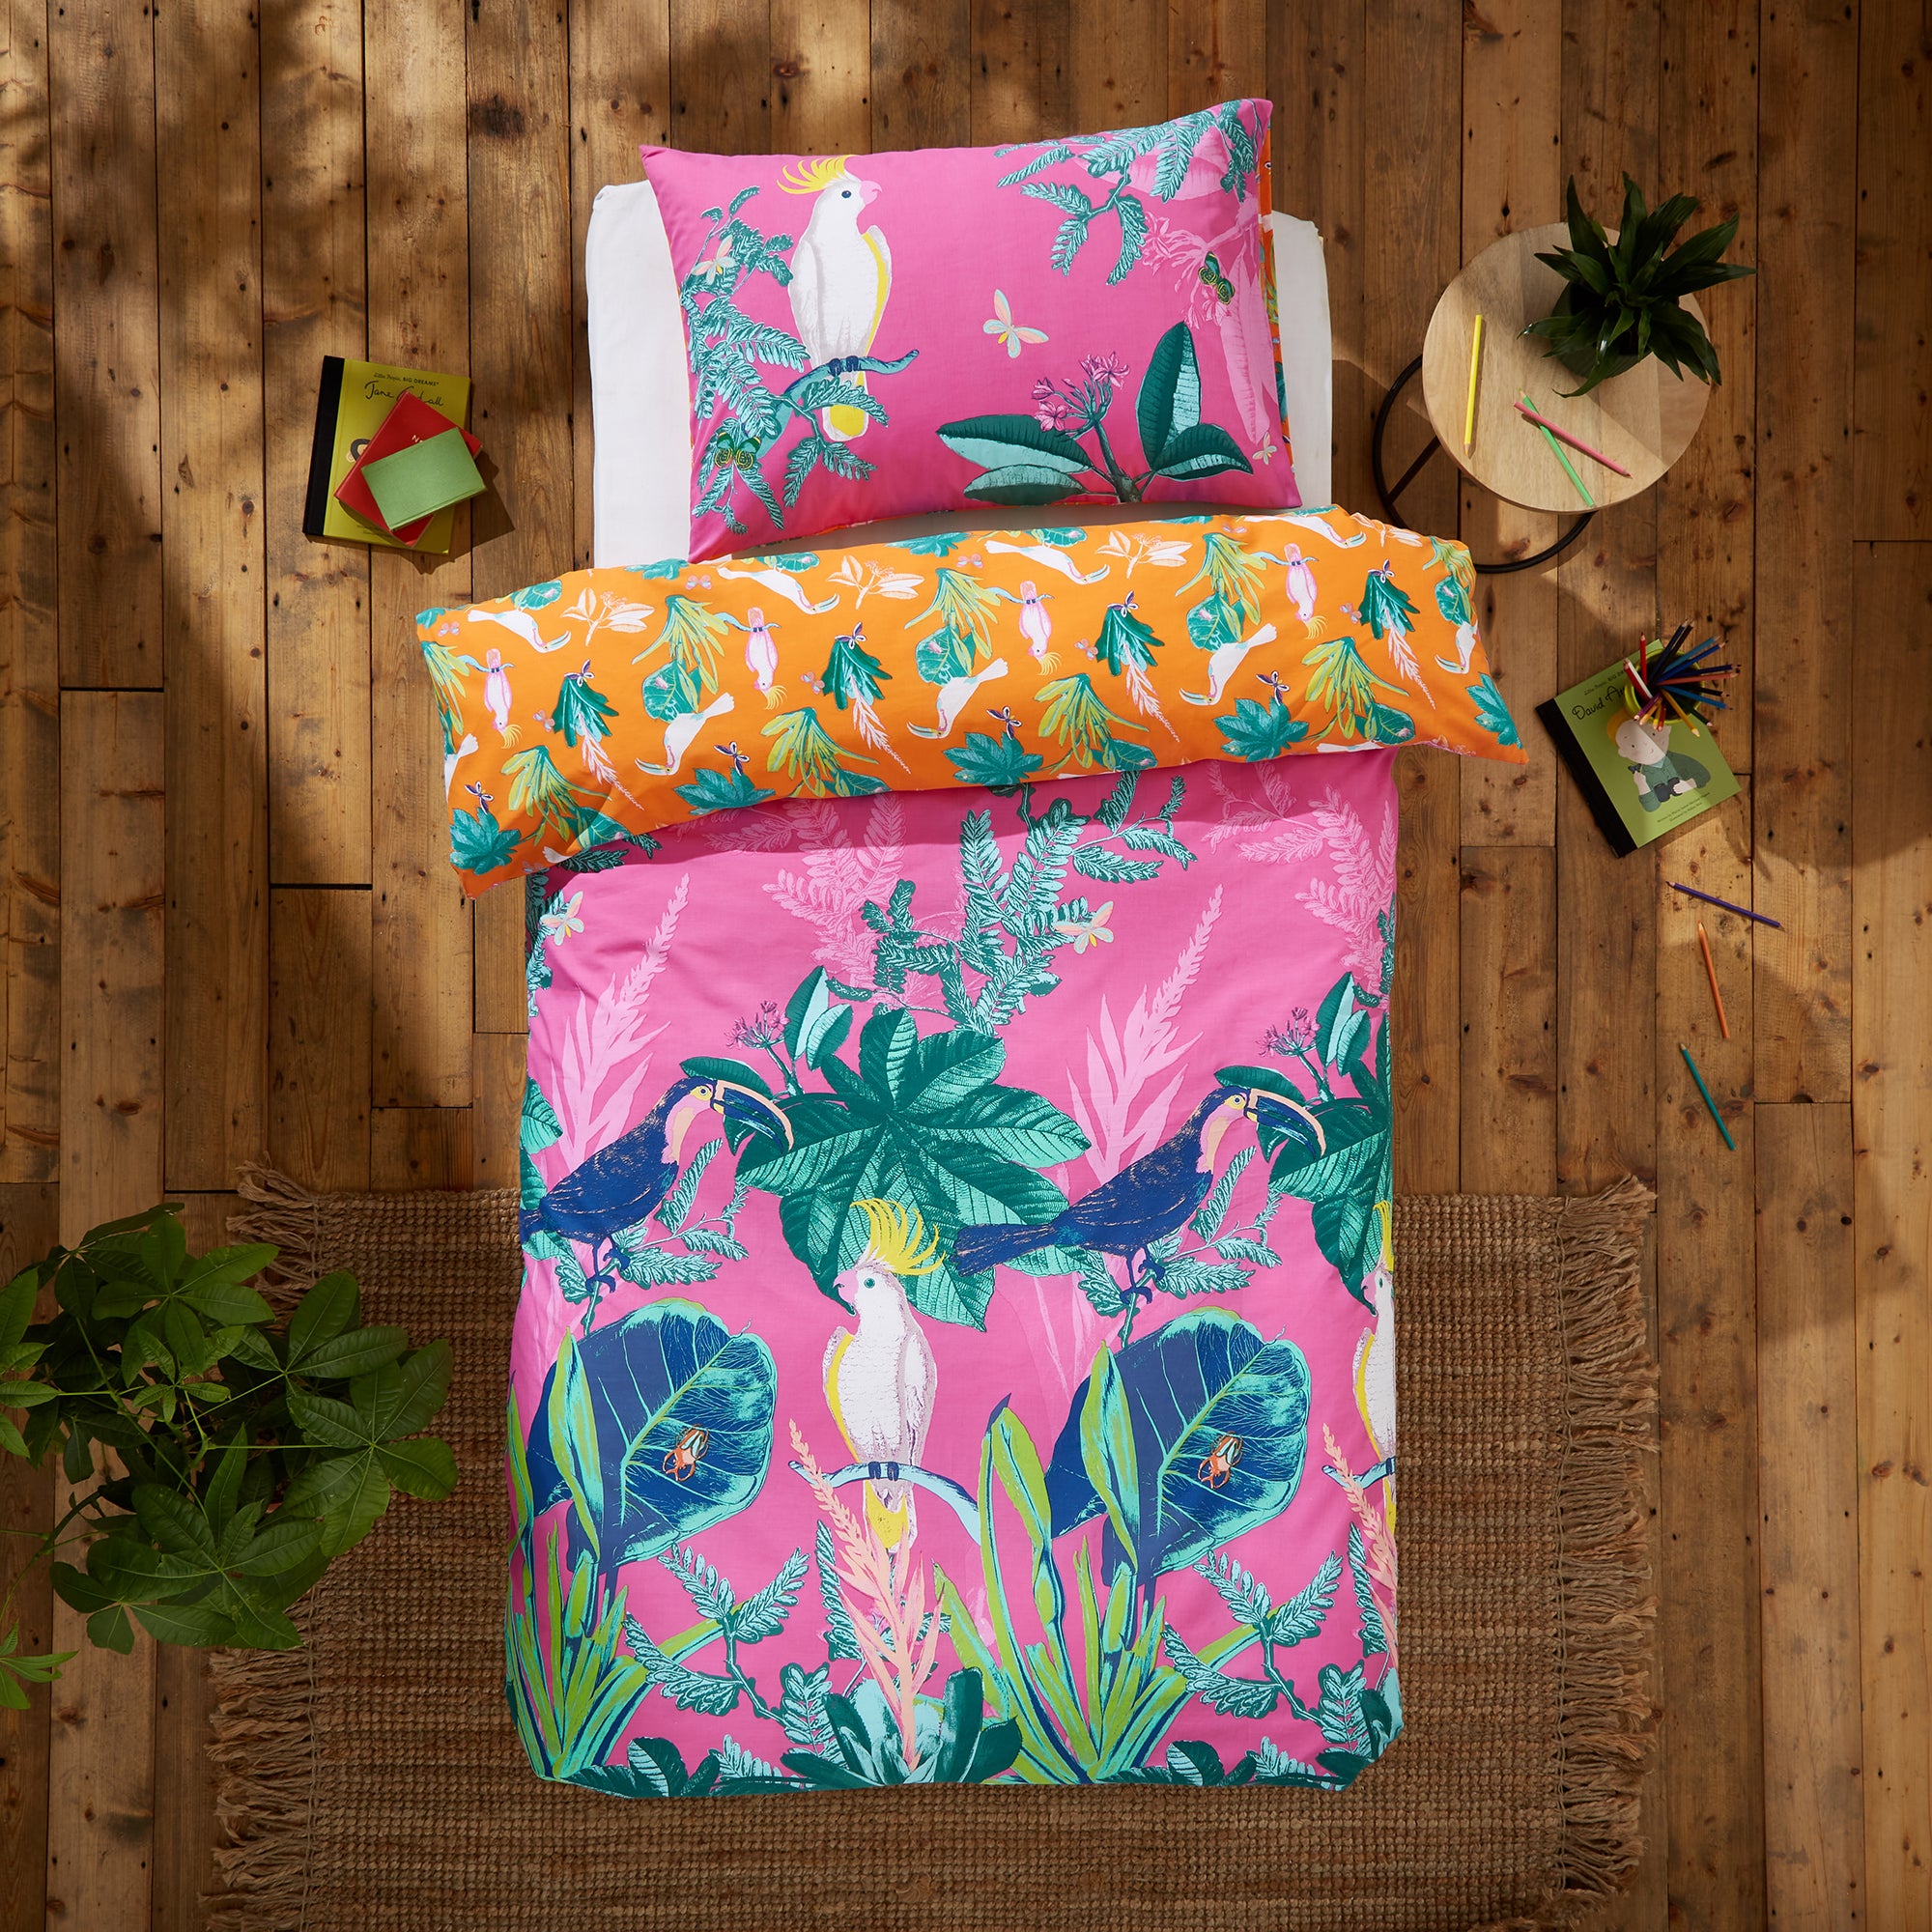 Explore The Tropics Duvet Cover Pillowcase Set Pink